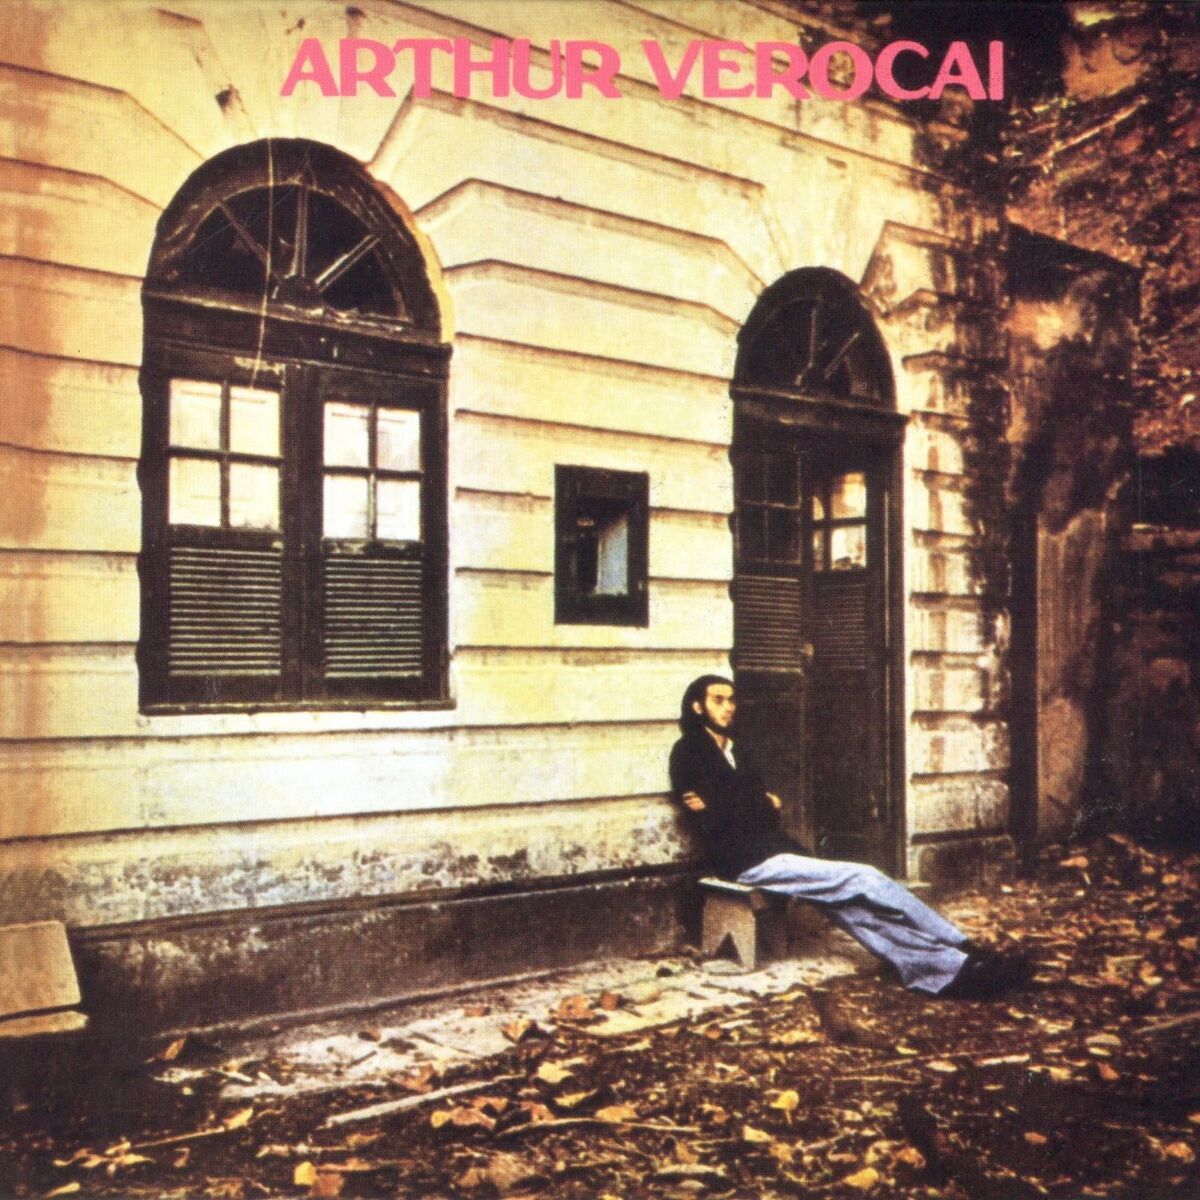 Arthur Verocai: albums, songs, playlists | Listen on Deezer